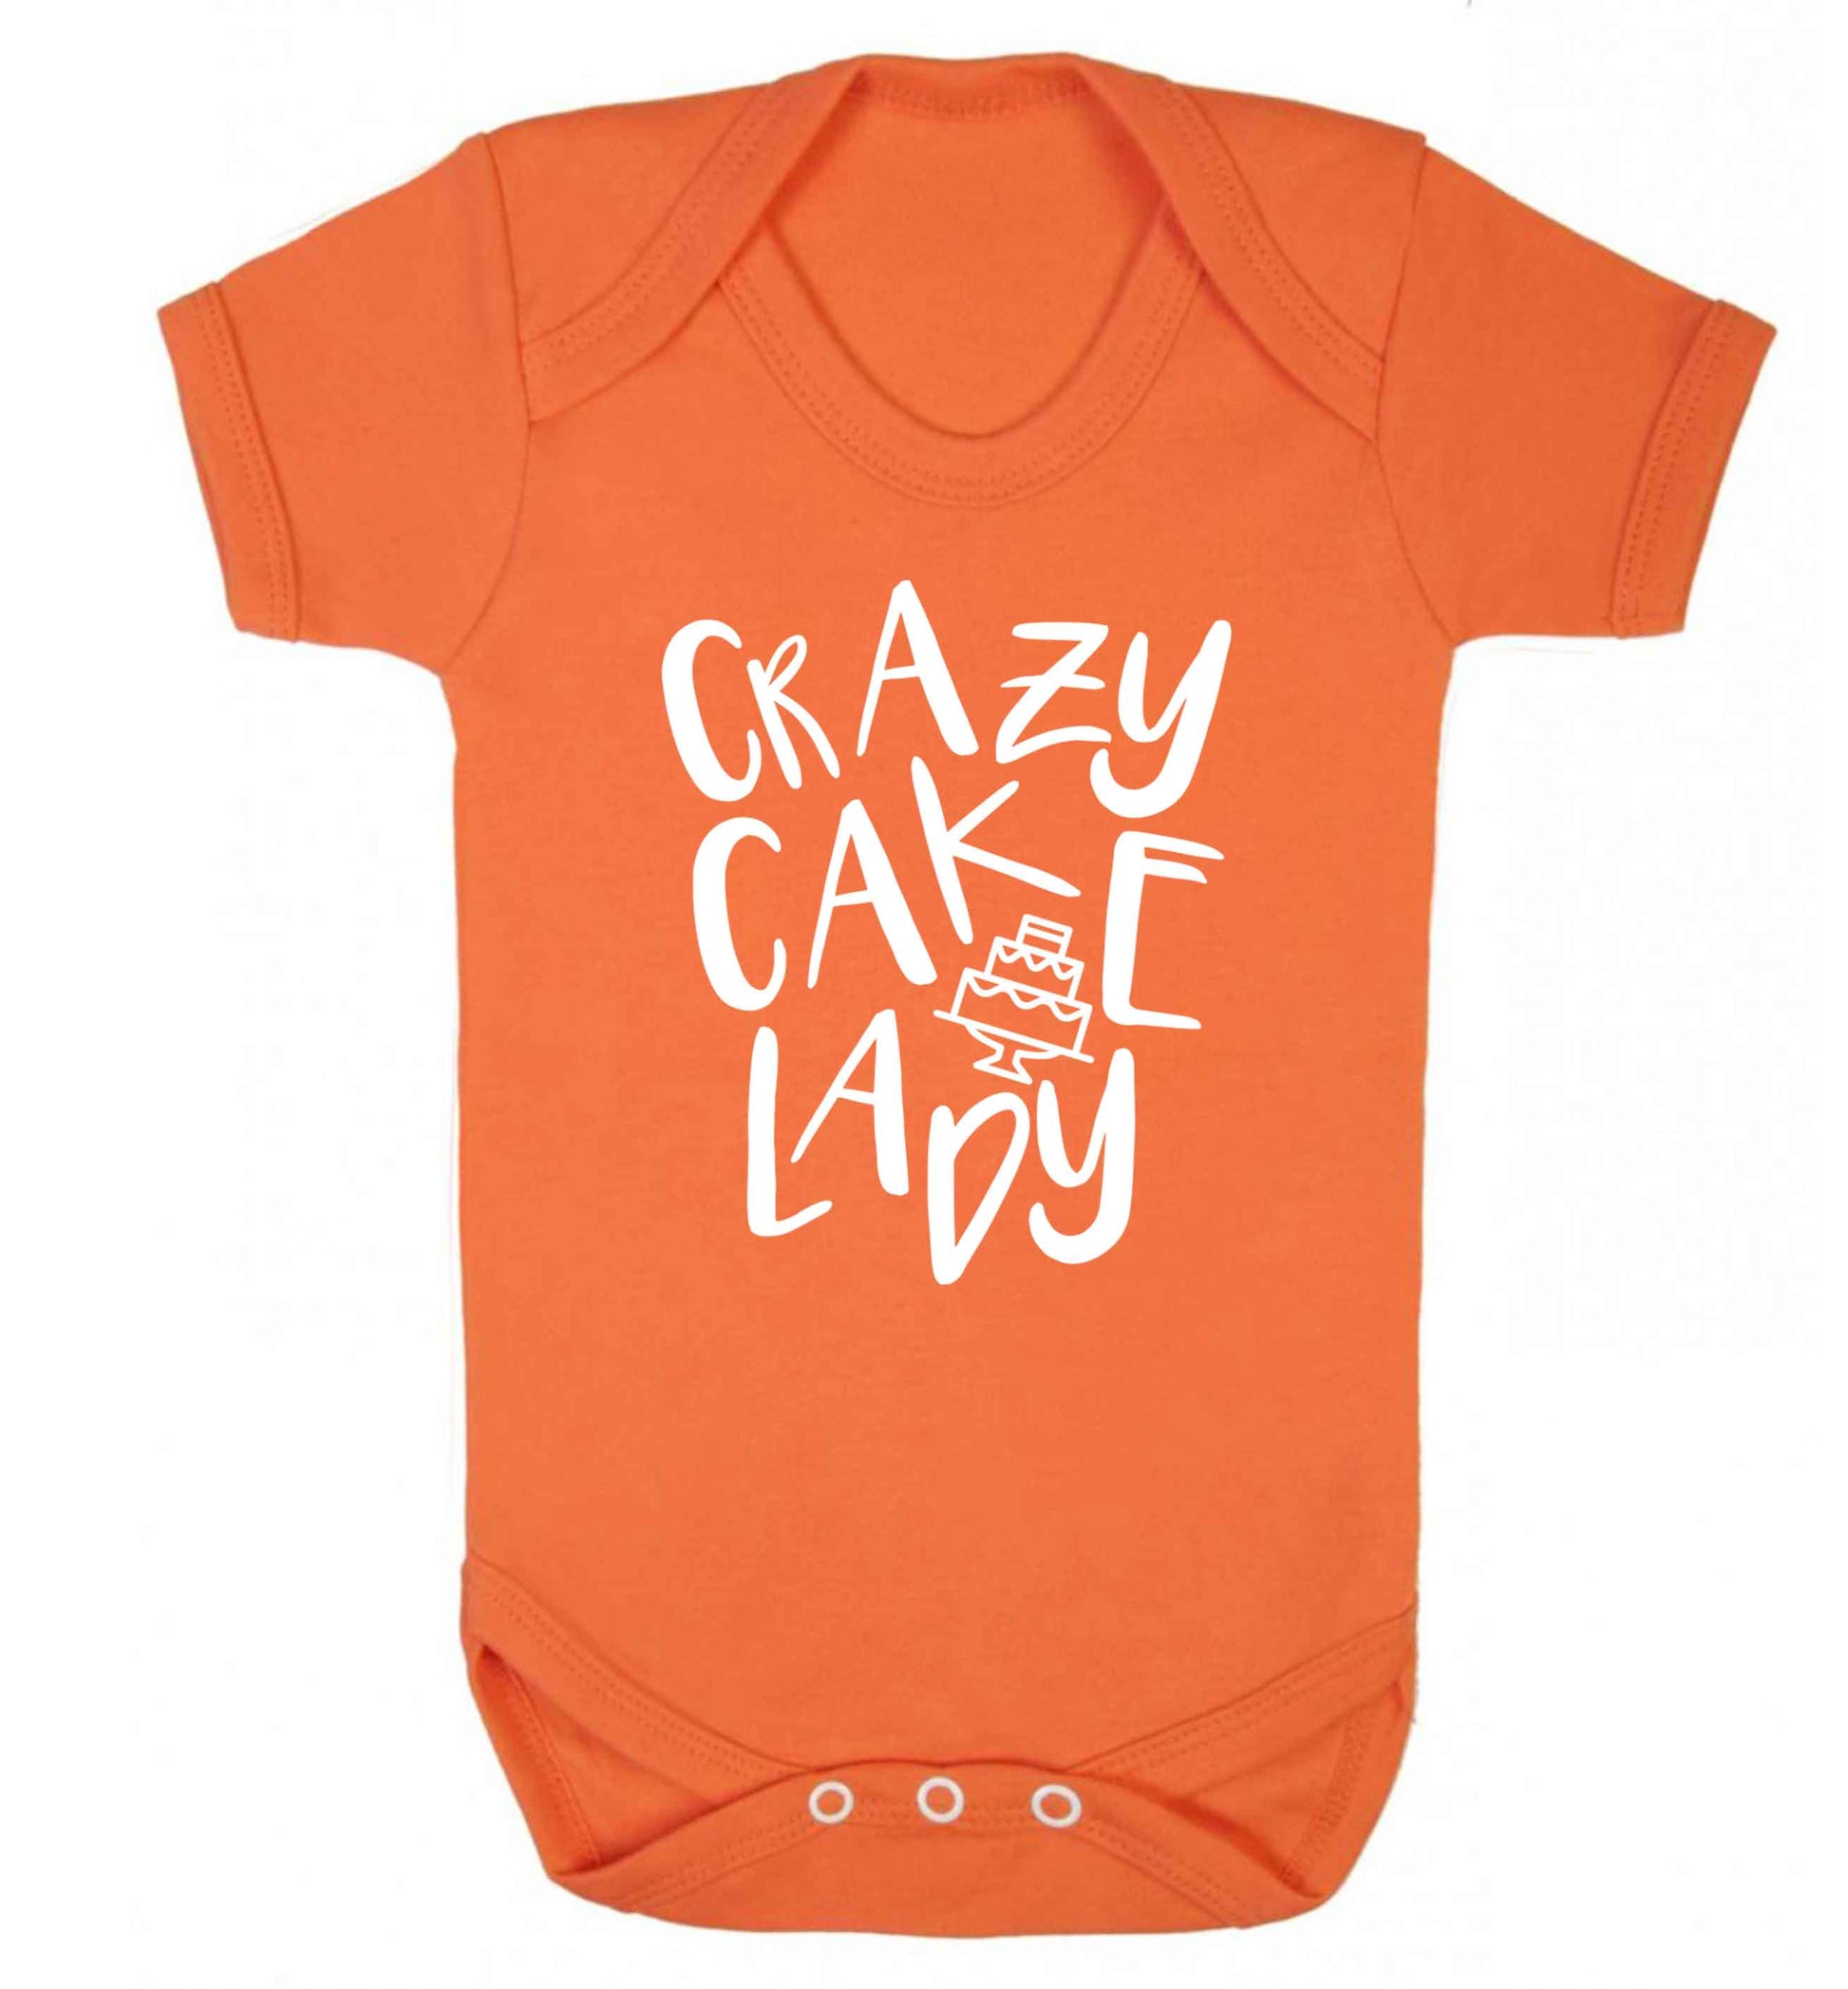 Crazy cake lady Baby Vest orange 18-24 months